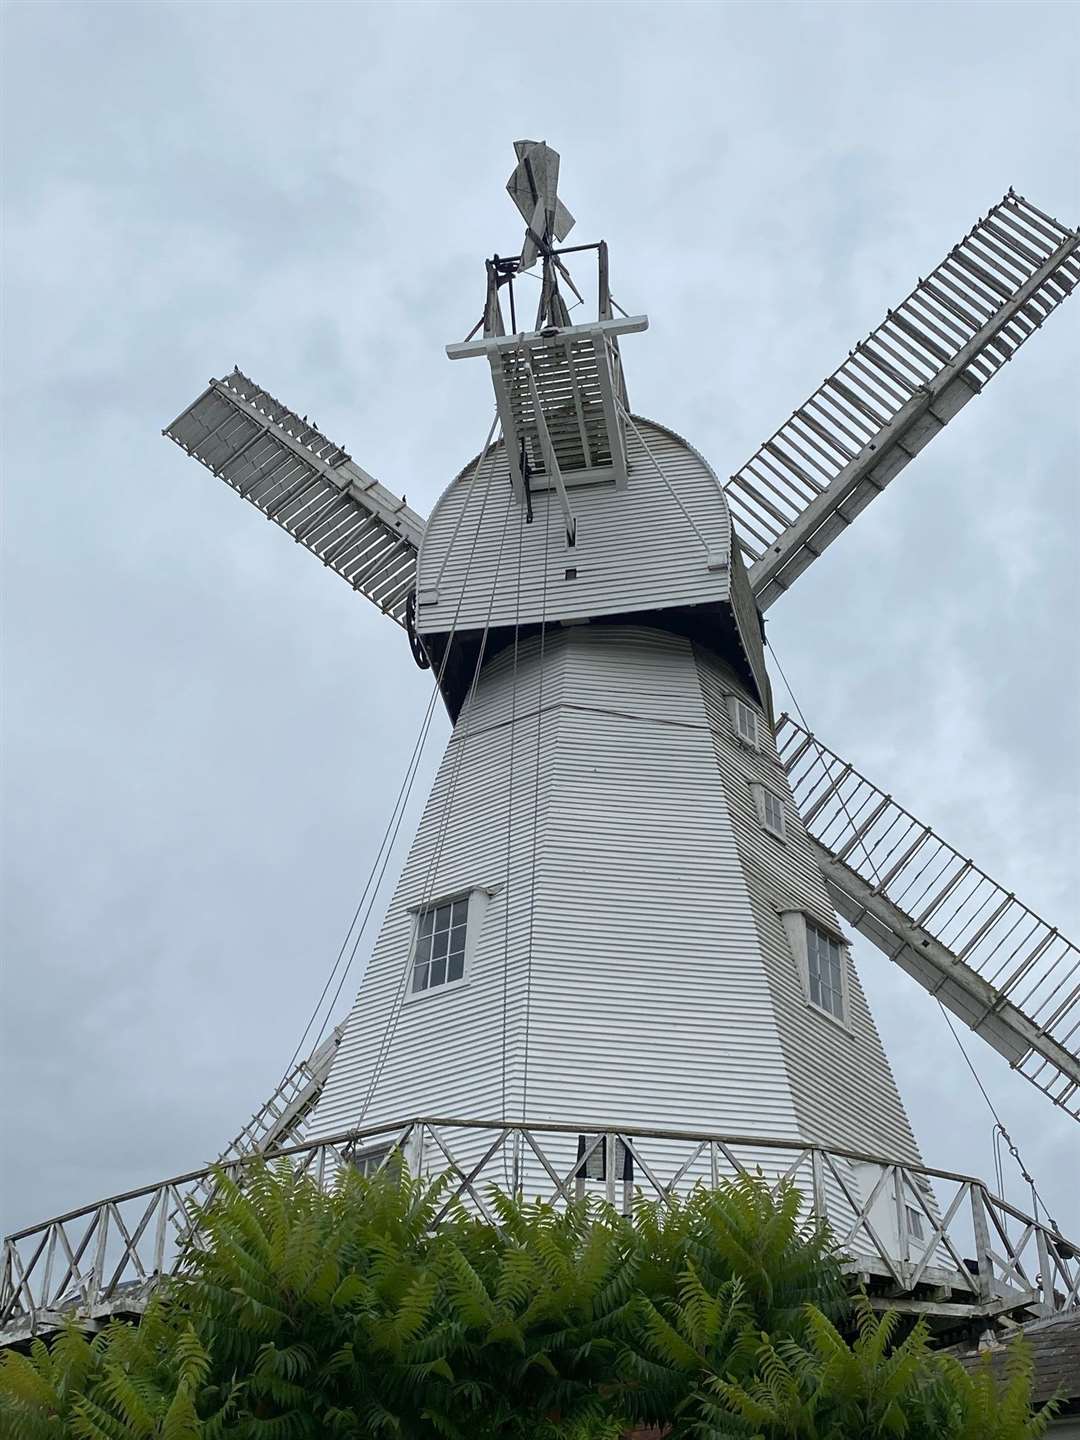 The Willesborough Windmill